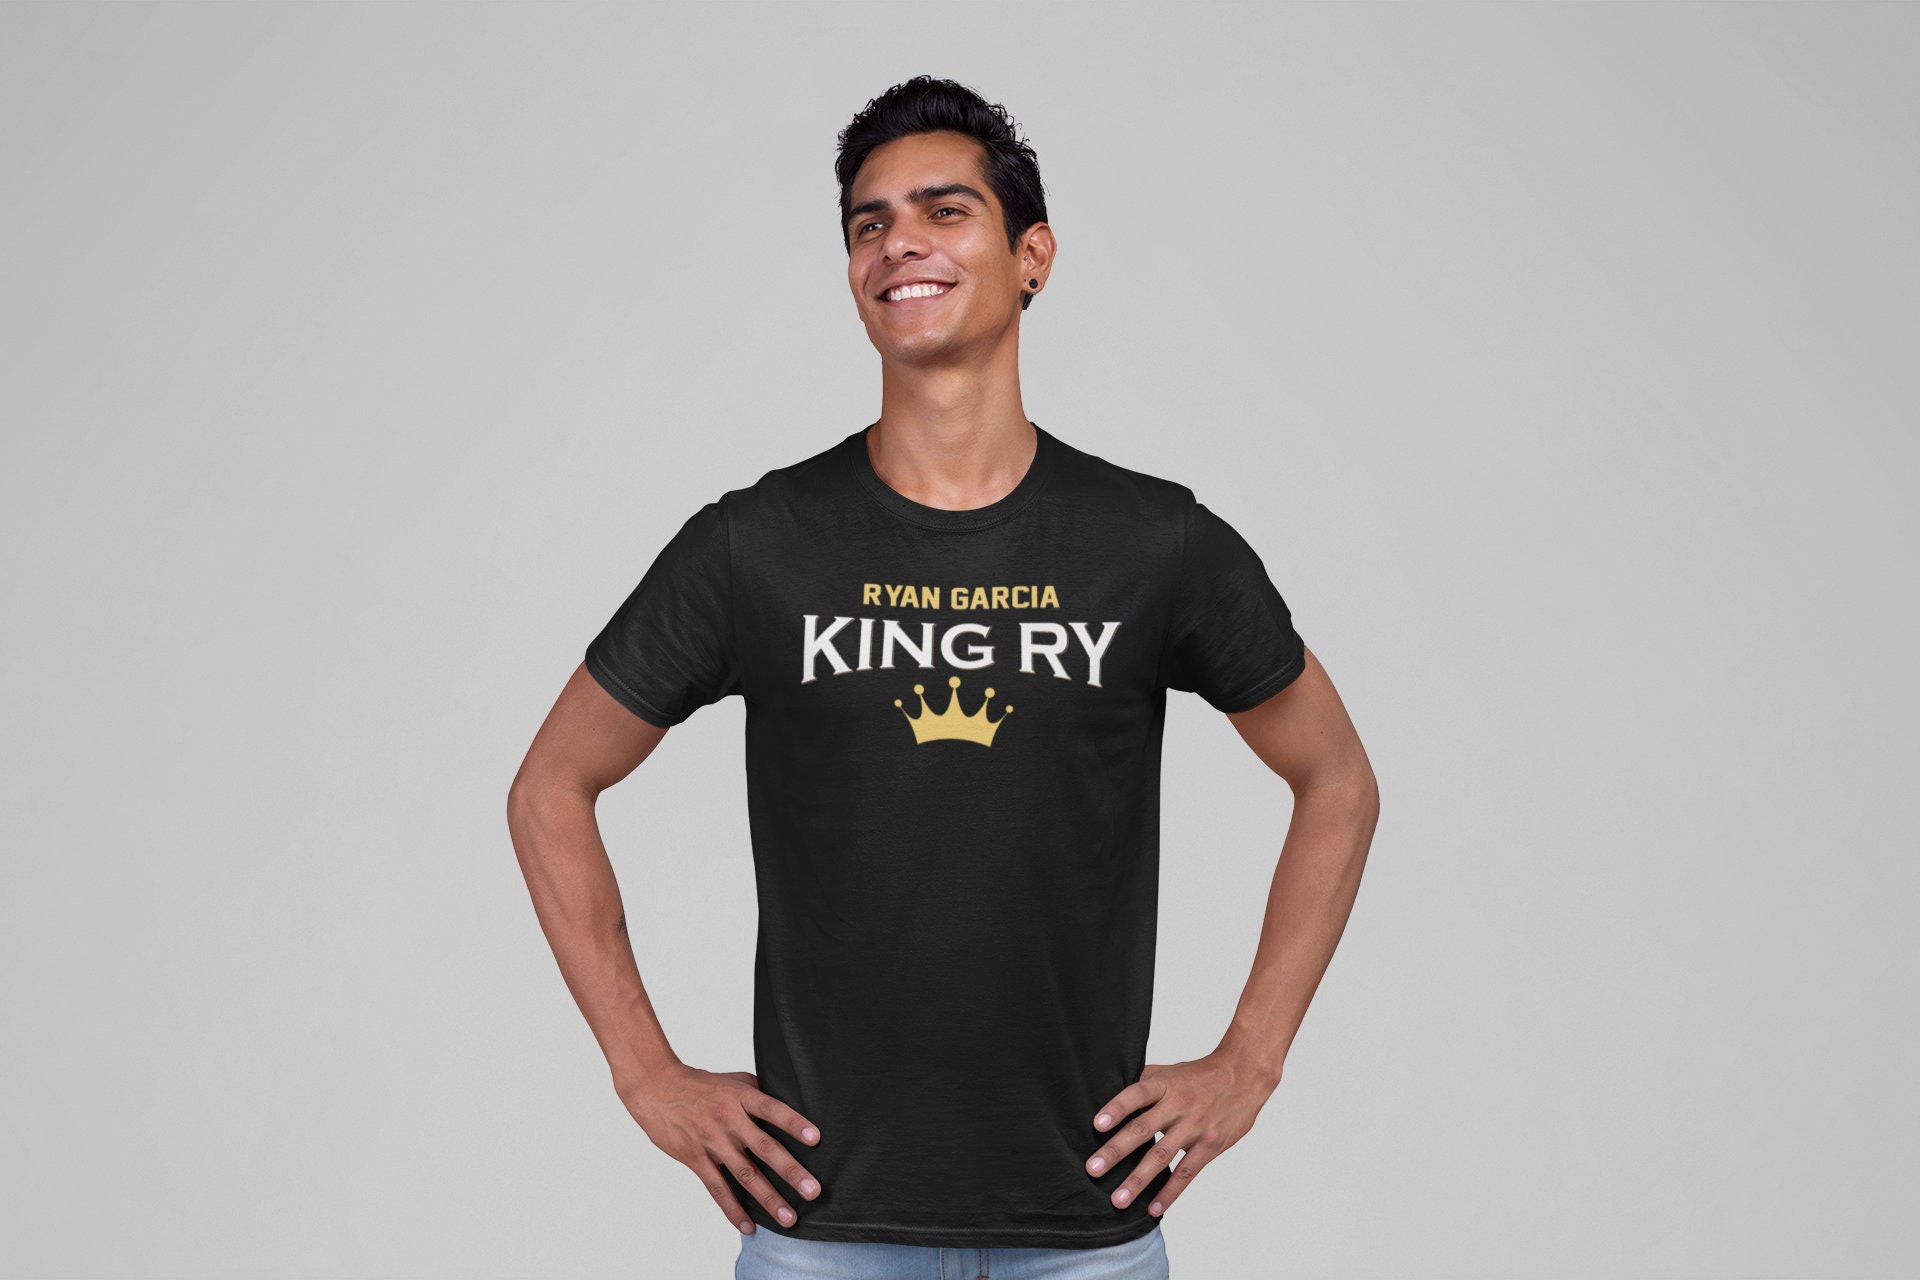 Buy King Ryan Garcia Boxing Fighter Wear Unisex T-shirt Online in India 